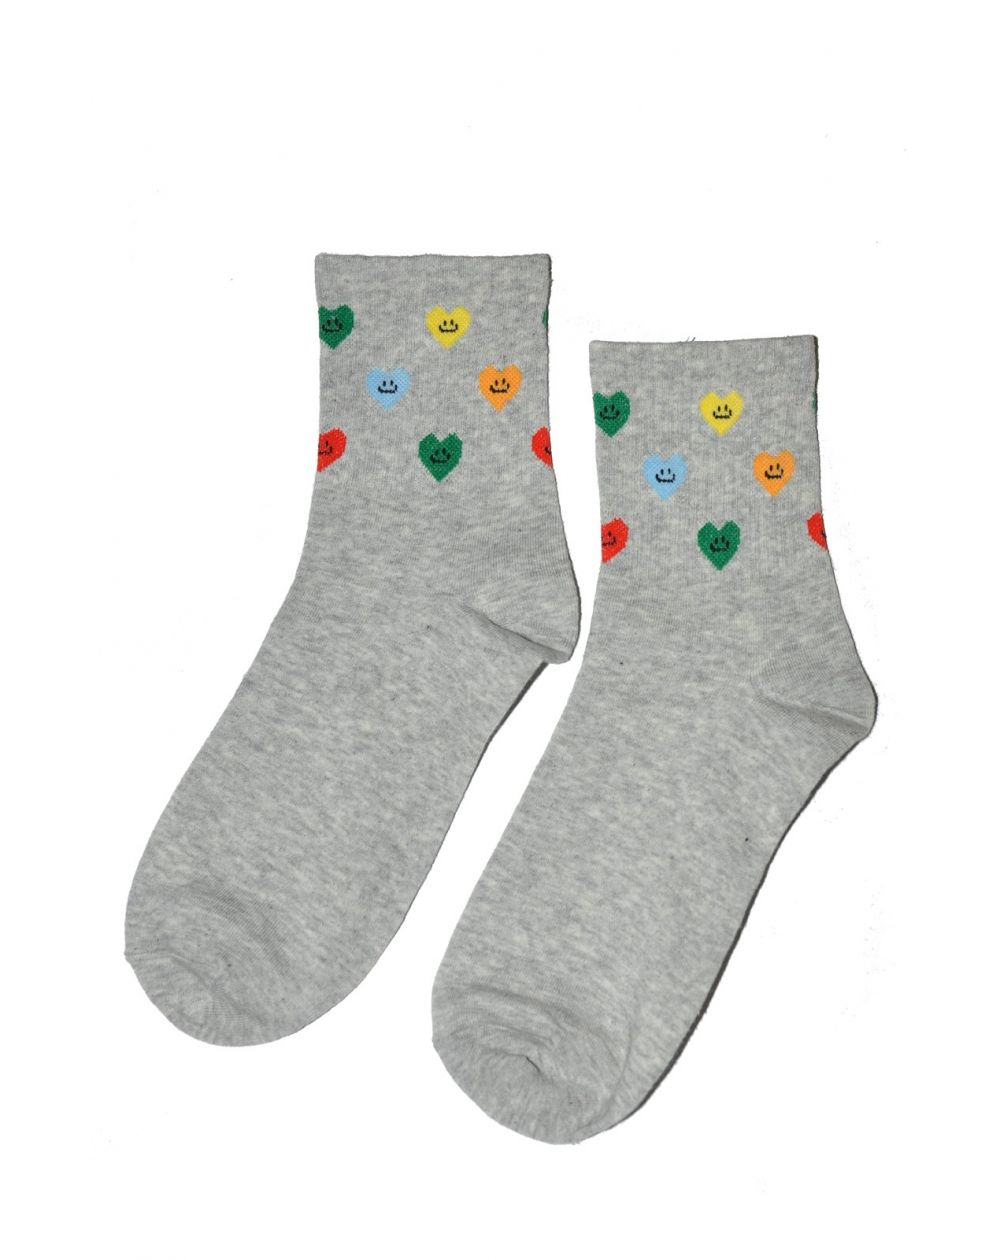 Magnetis 75 Colorful Hearts 21/22 socks